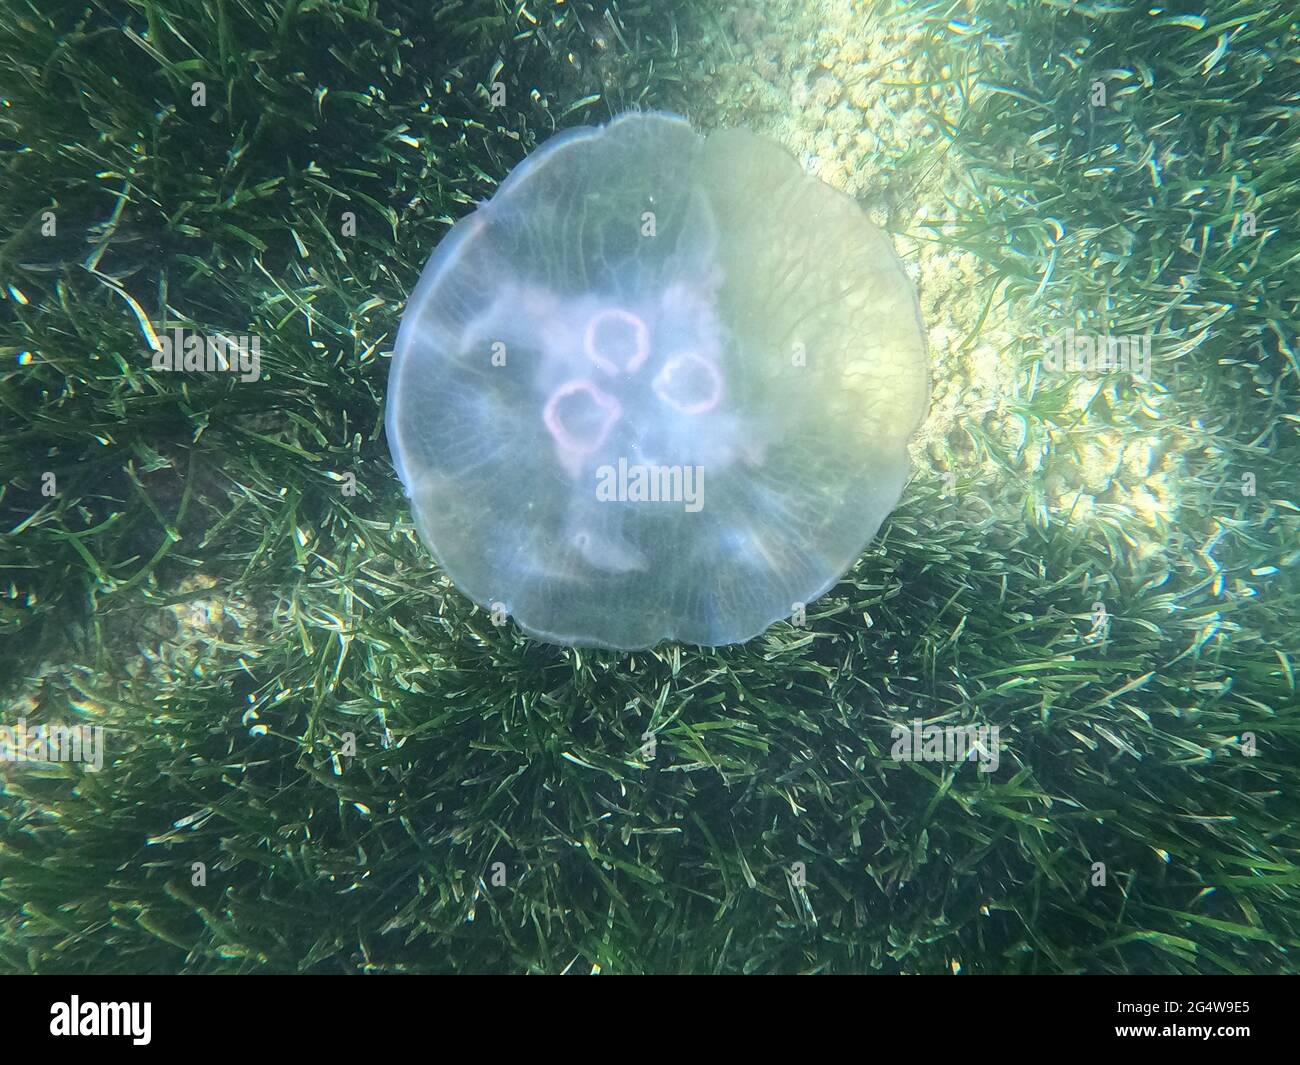 medusas de la luna, aurelia aurita, medusas comunes Foto de stock